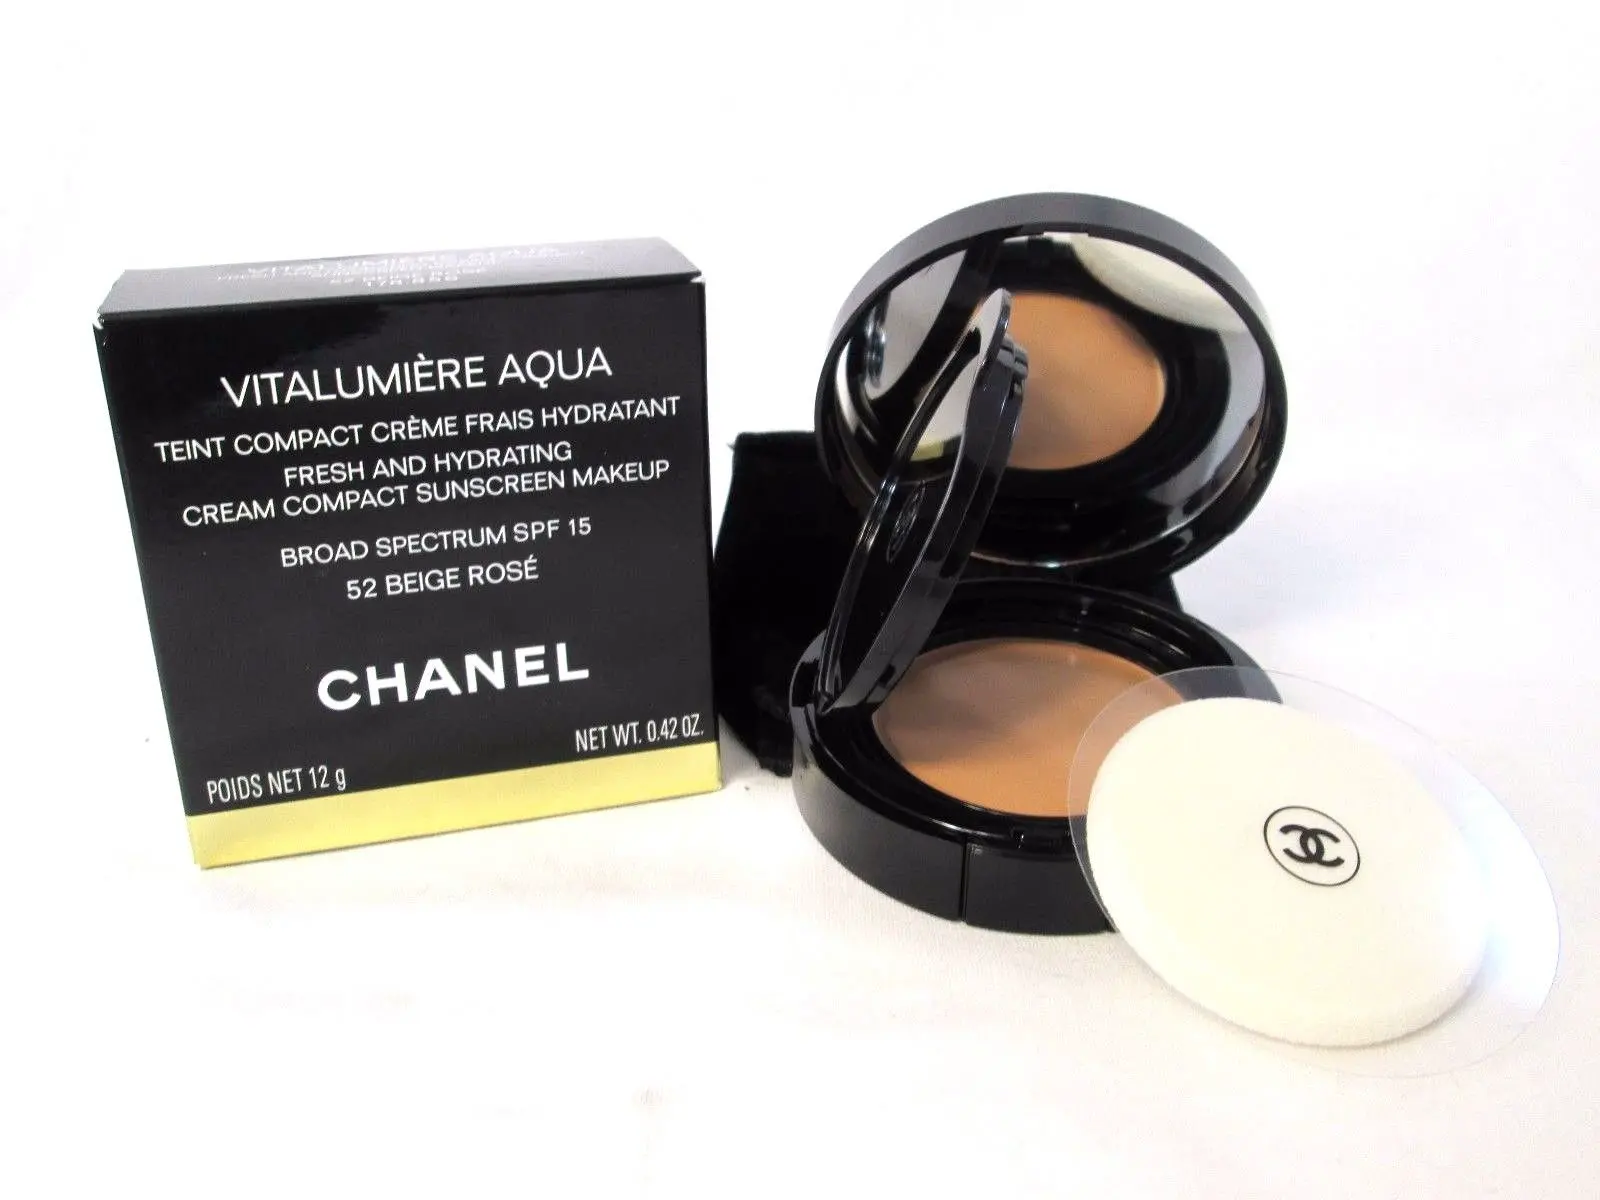 Chanel Vitalumiere Aqua FRESH AND HYDRATING CREAM COMPACT MAKEUP SPF 15 30  BEIGE